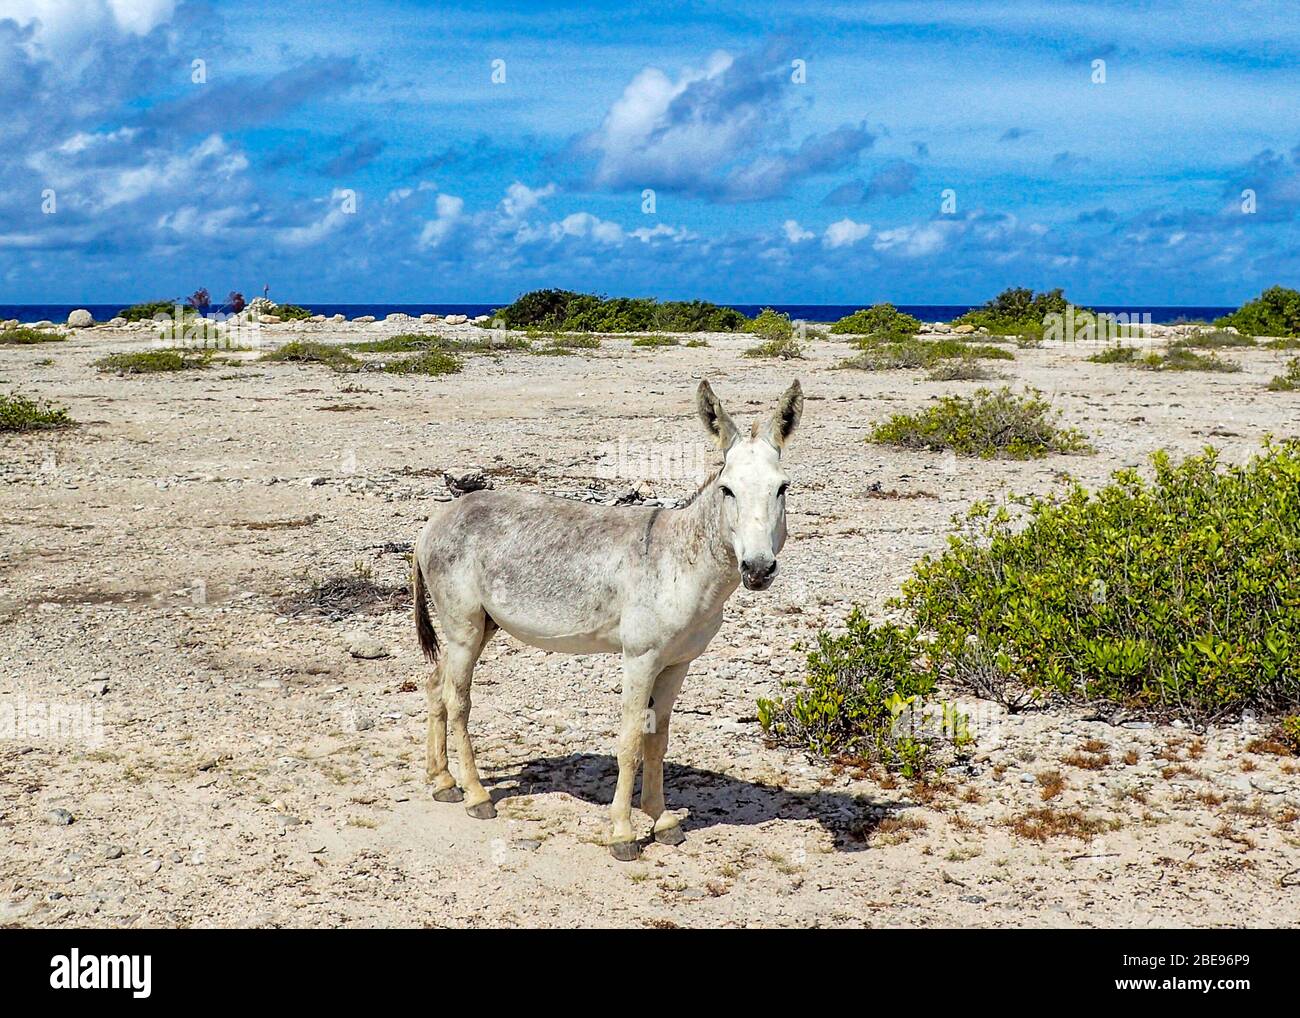 A feral donkey living near a beach in Bonaire. Stock Photo